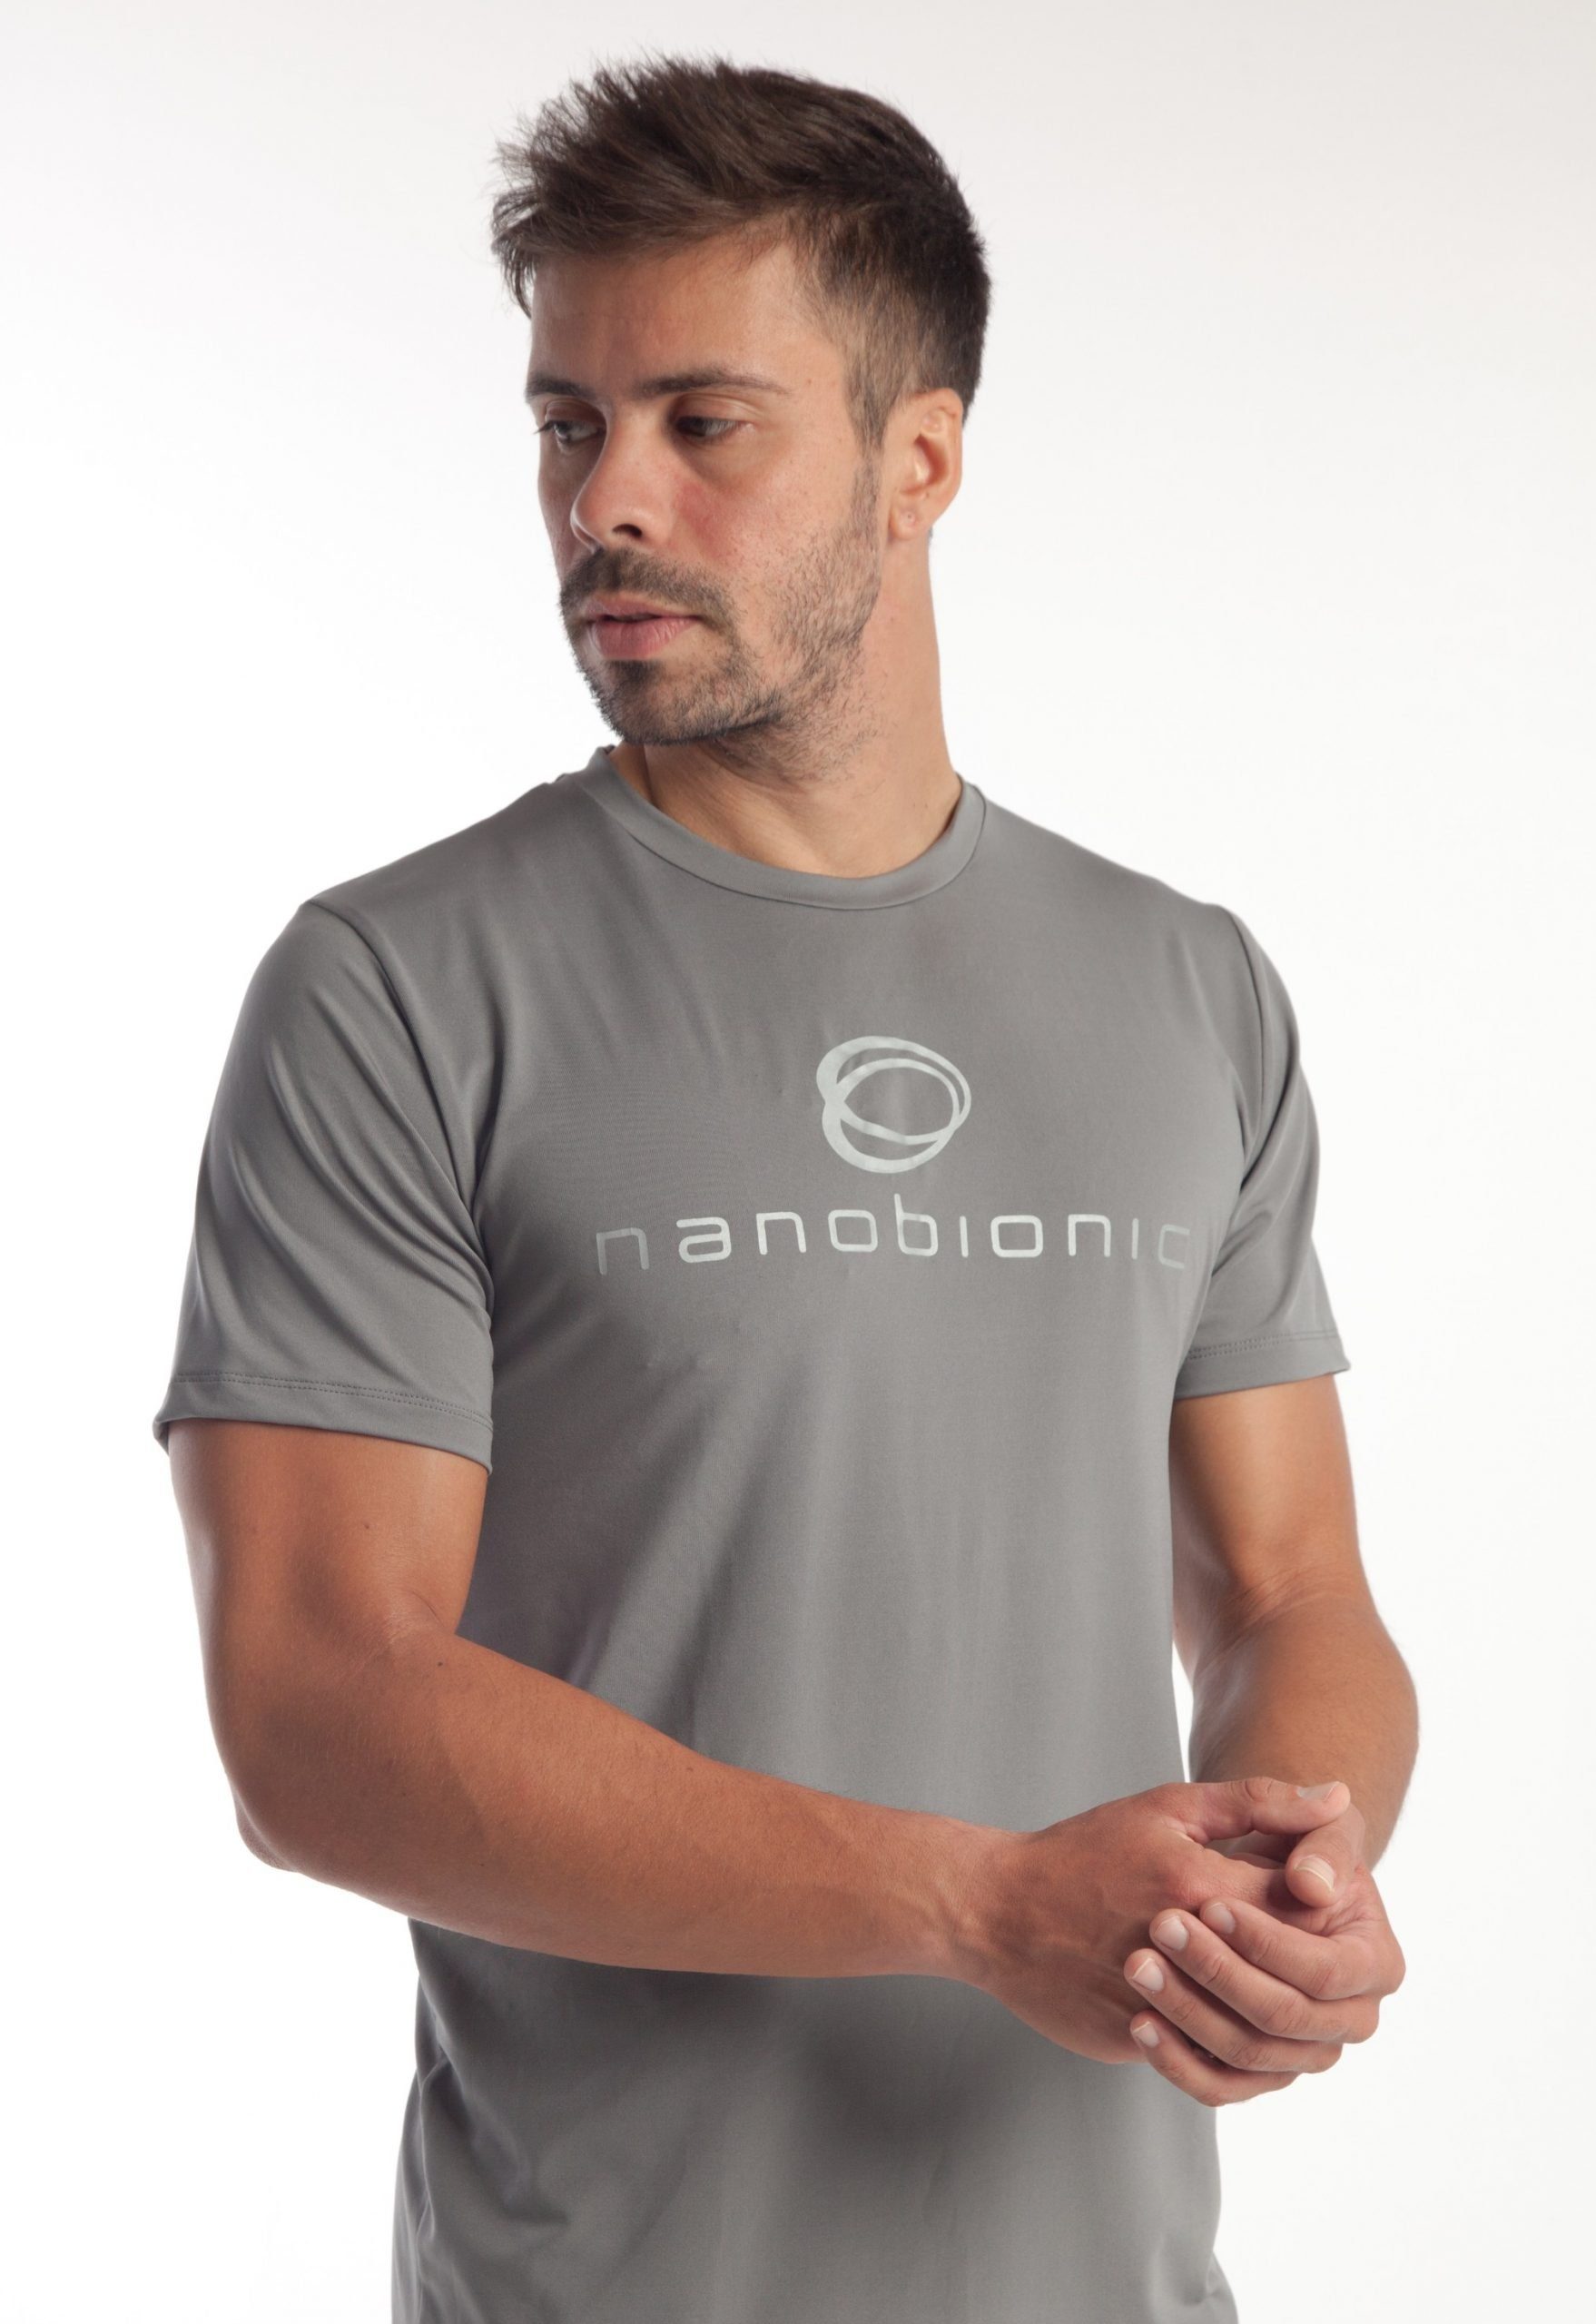 www.nanobionic.de NANOBIONIC® und I-Tech (Innovative Energiequelle!!, T-shirt (grau/silber) Funktionsshirt exklusive NANOBIONIC® Award) NANOBIONIC®-Technologie, eine Iconic - nahezu NASA endlose Nanobionic®